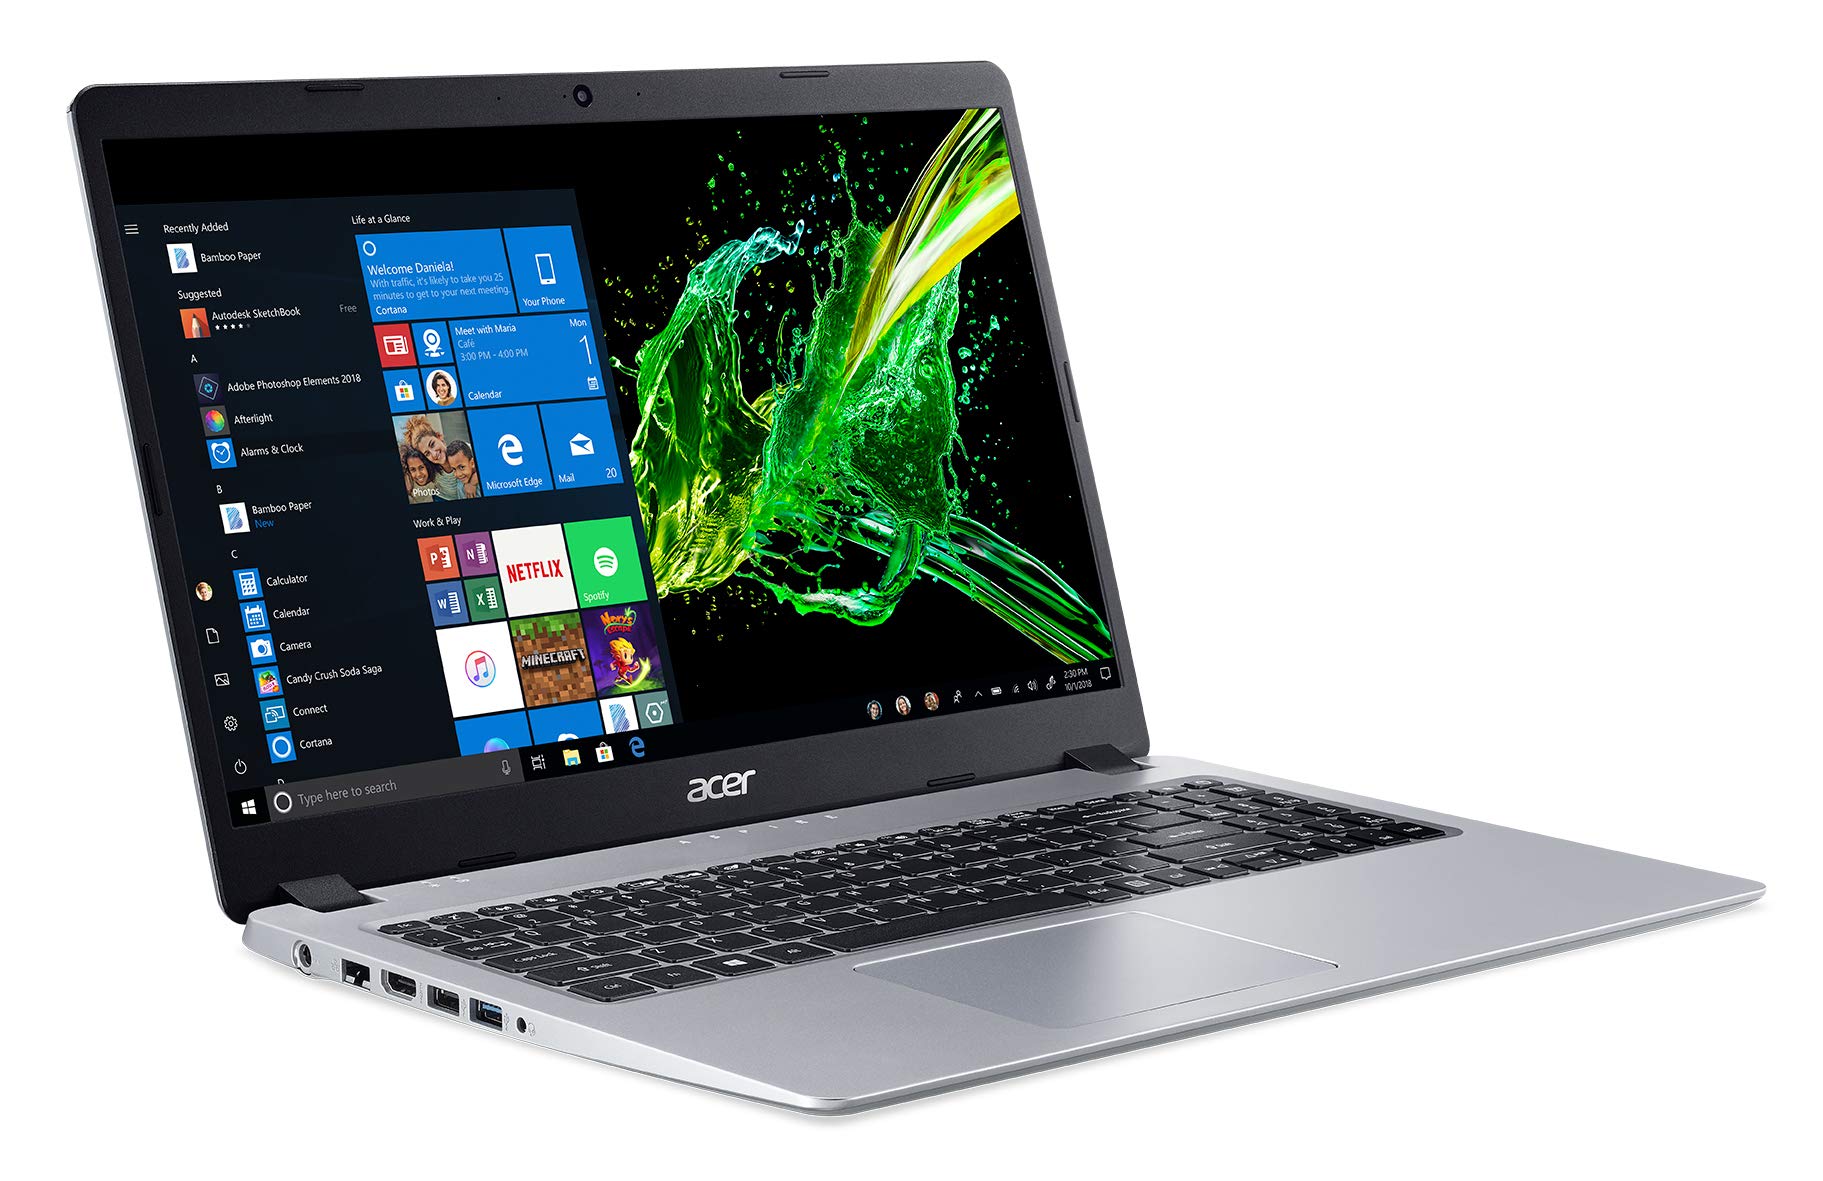 Acer Aspire 5 Slim Laptop, 15.6" Full HD IPS Display, AMD Ryzen 3 3200U, Vega 3 Graphics, 4GB DDR4, 128GB SSD, Backlit Keyboard, Windows 10 in S Mode, A515-43-R19L